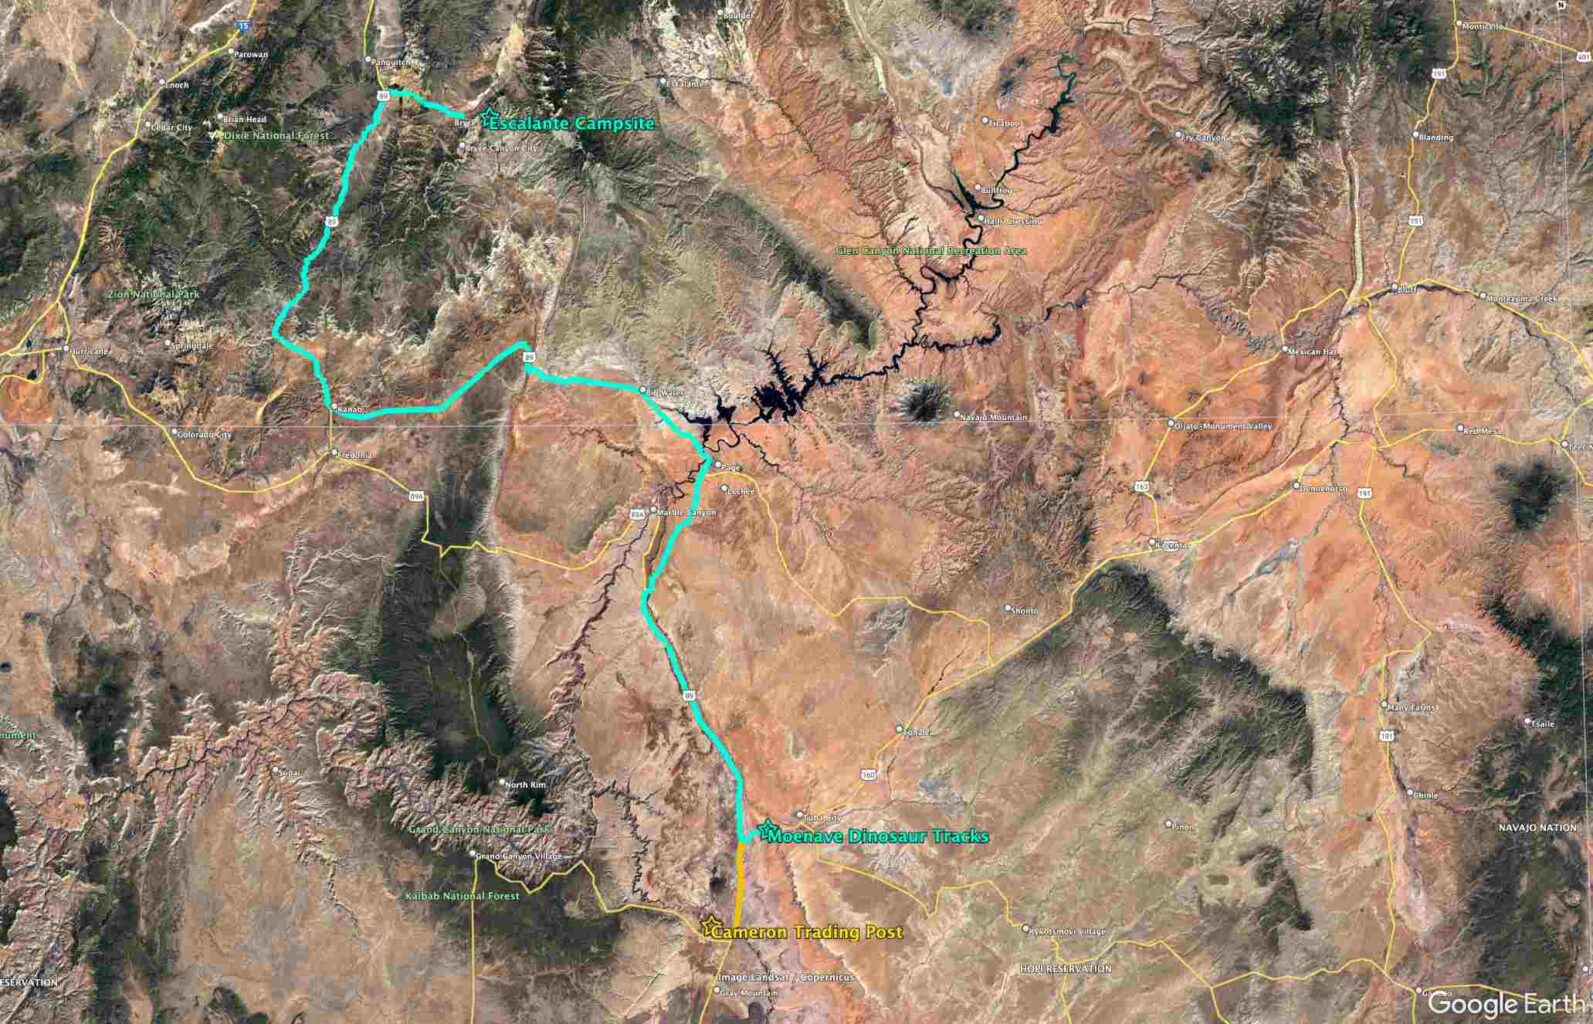 Image: map from Escalante campsite to Moenave Dinosaur Tracks